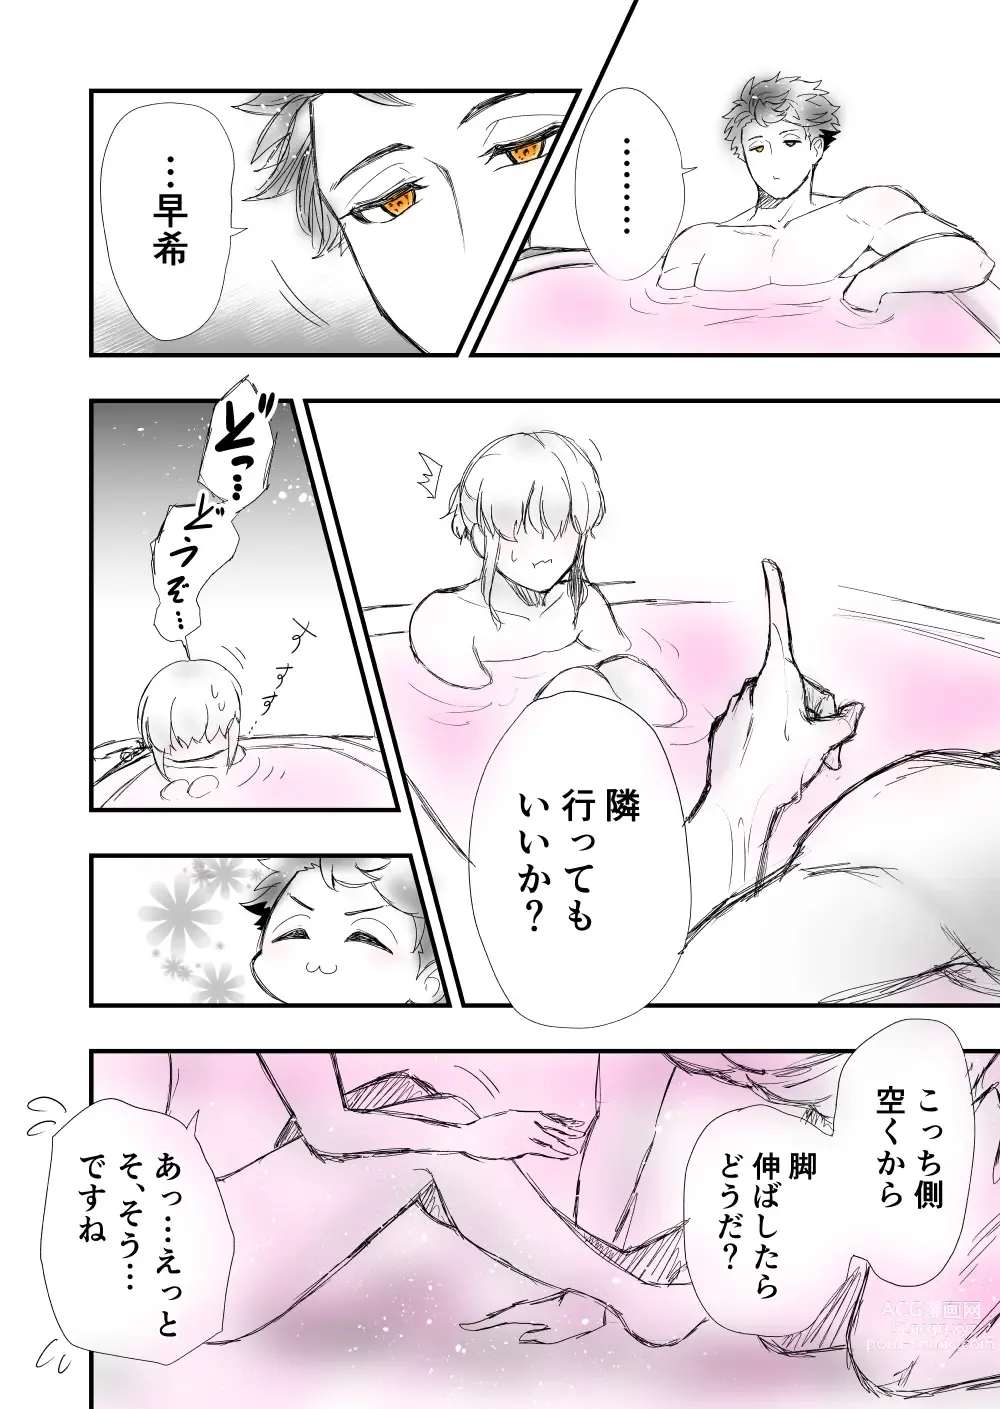 Page 8 of doujinshi 3